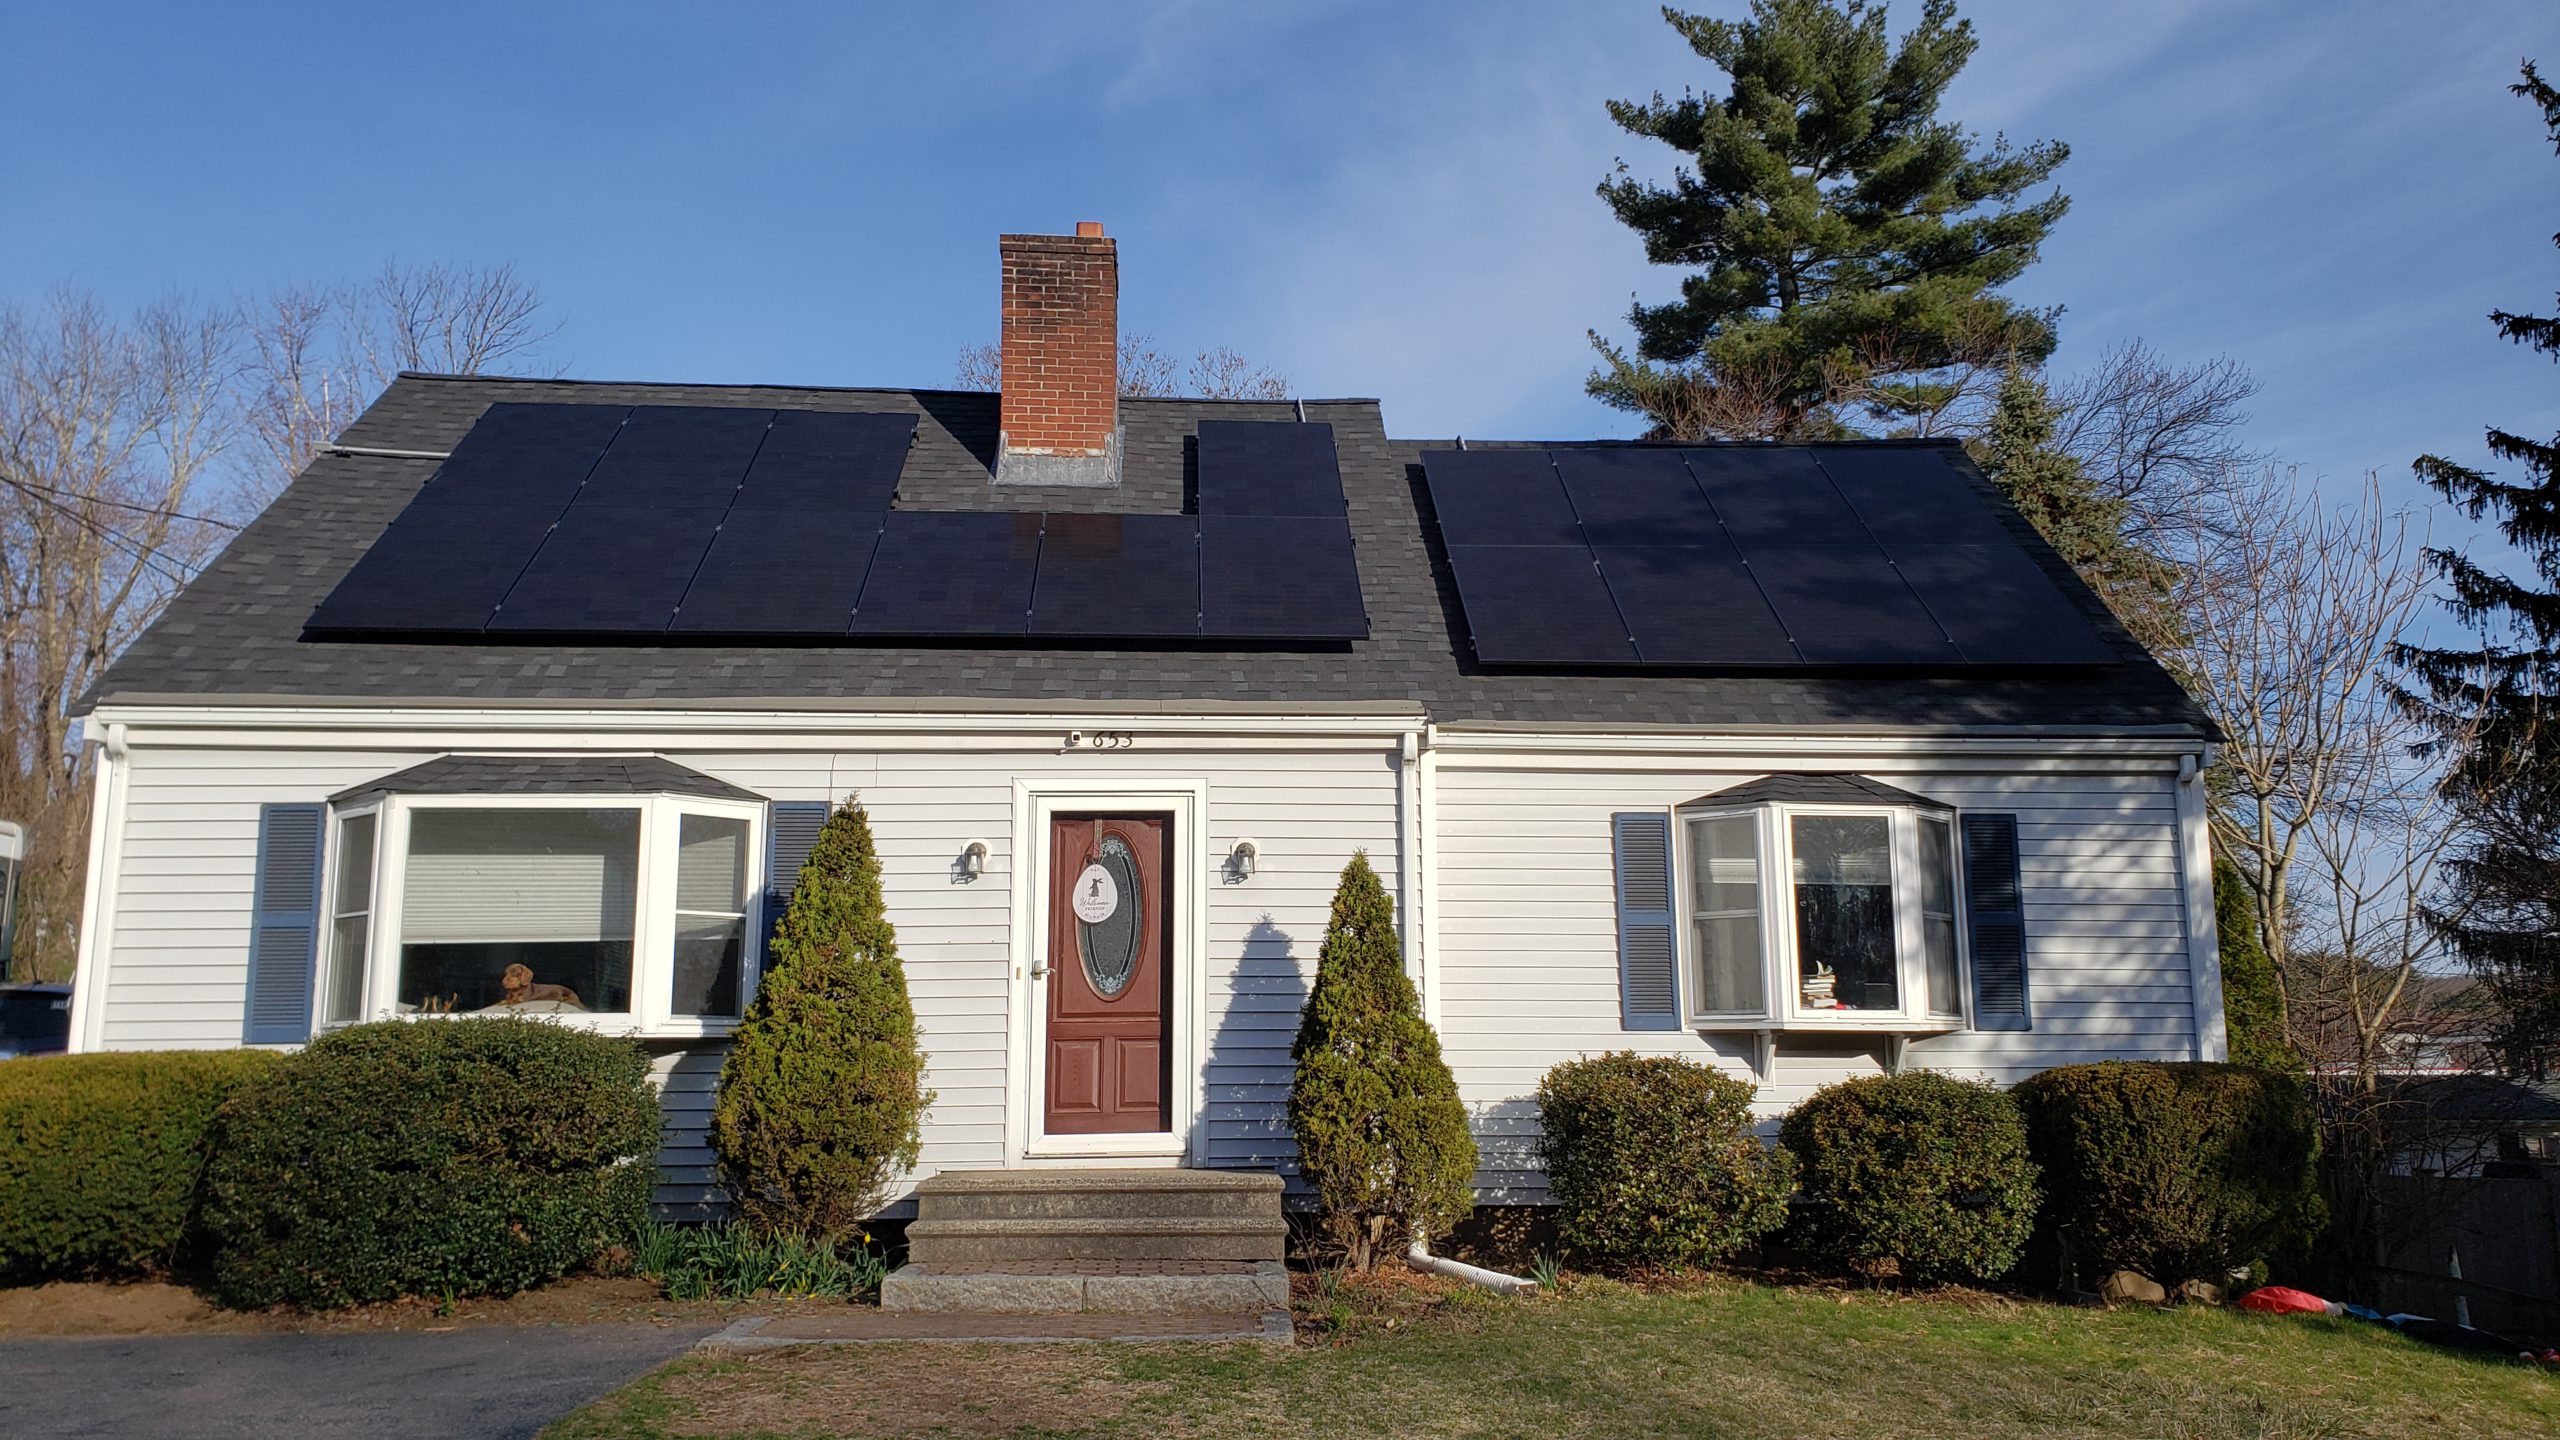 Case Study: Going Solar with Momentum in Massachusetts